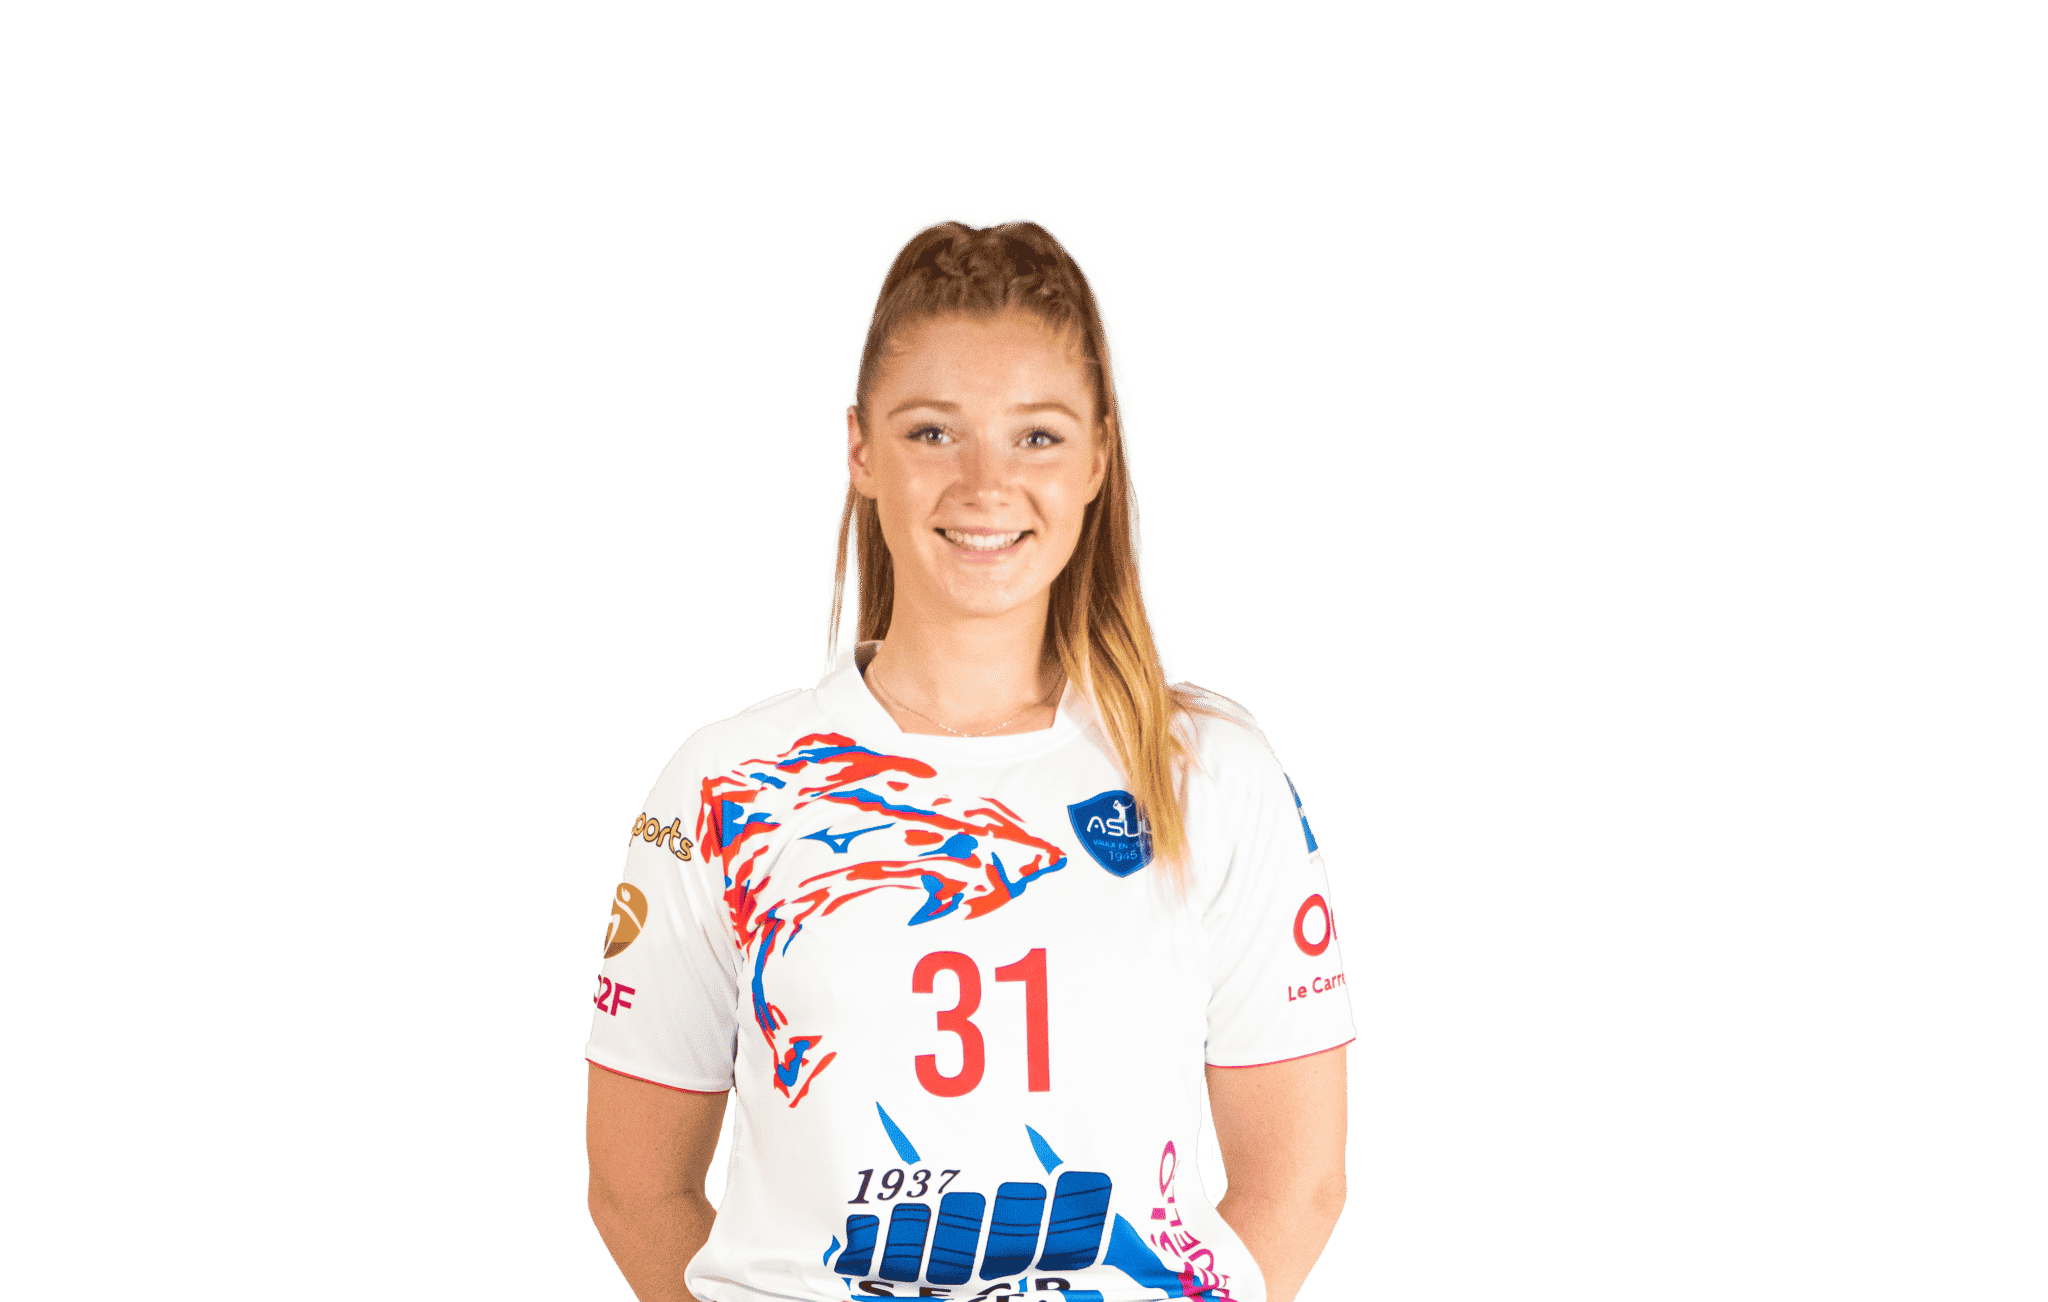 apolline-blin - Gardienne division 2 féminine de handball de ASUL Vaulx-en-Velin